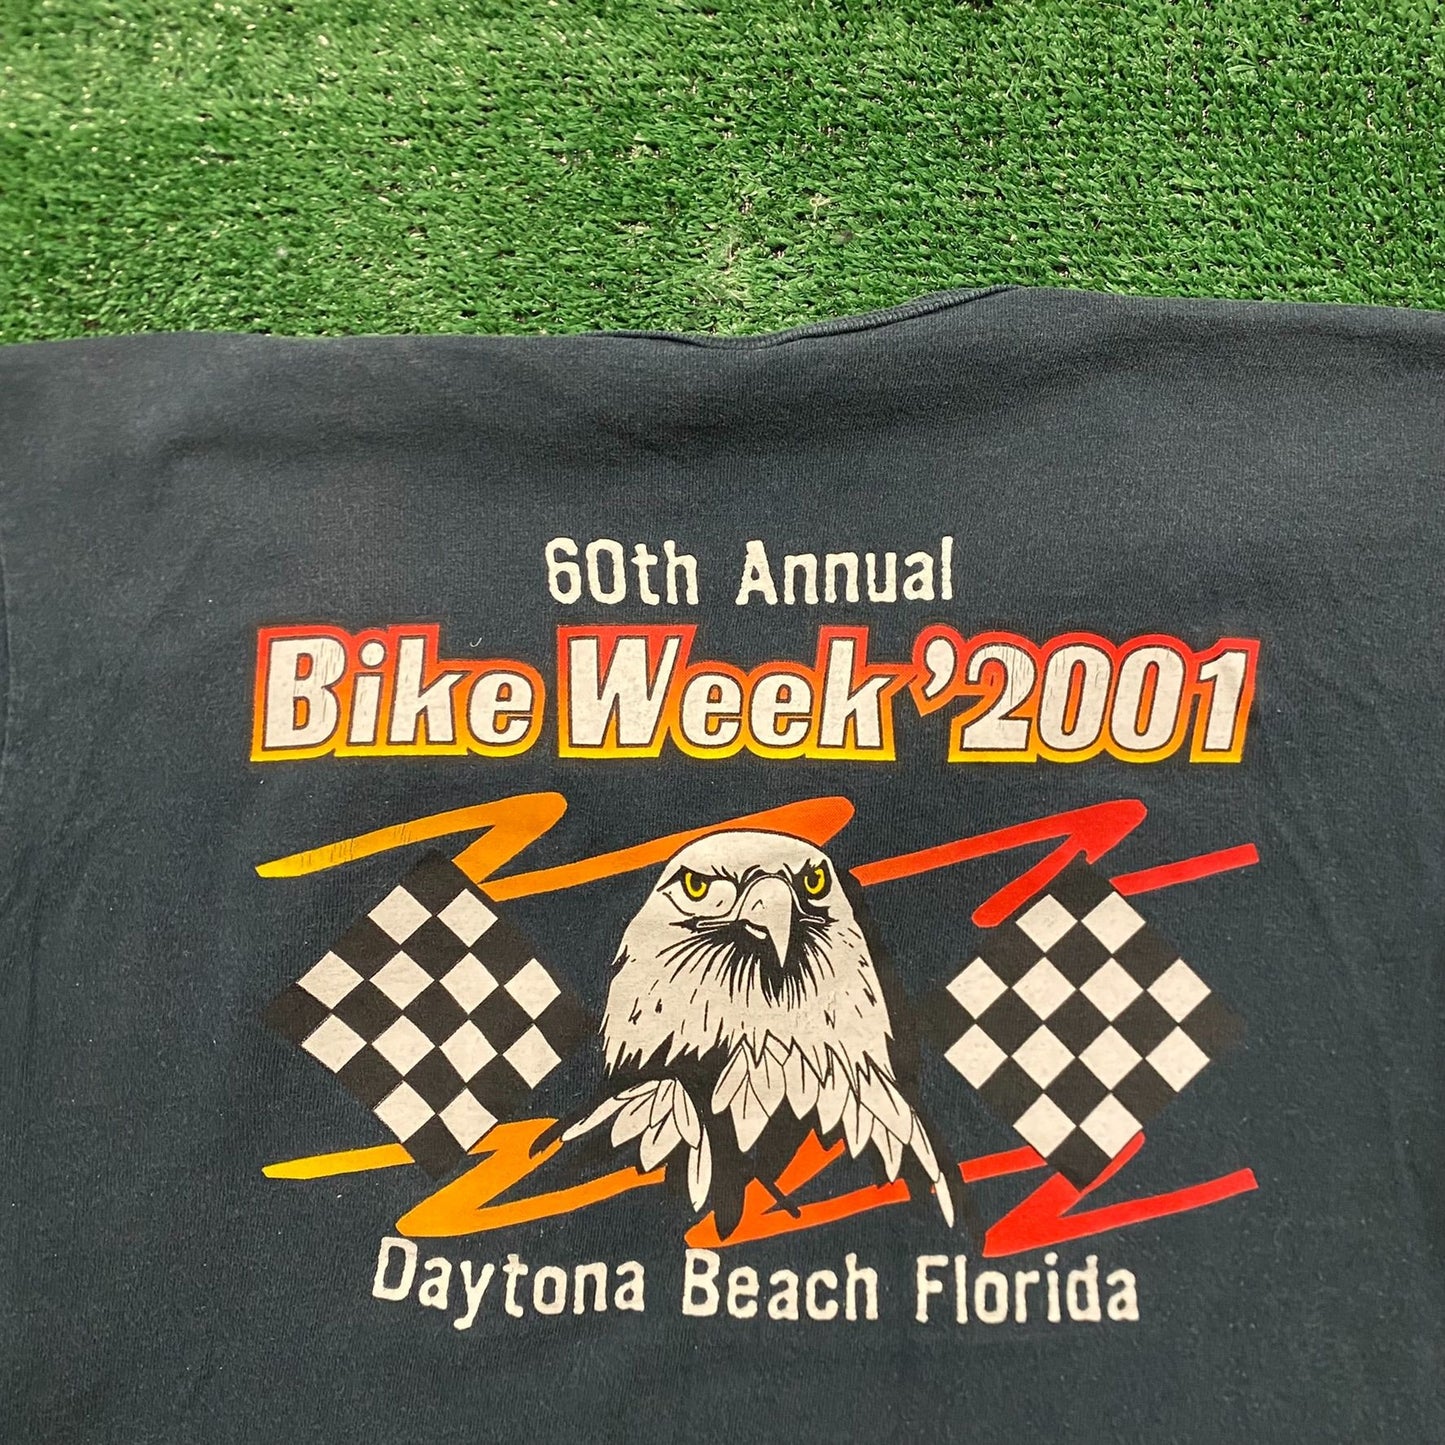 Daytona Bike Week 2001 Vintage Moto Biker T-Shirt